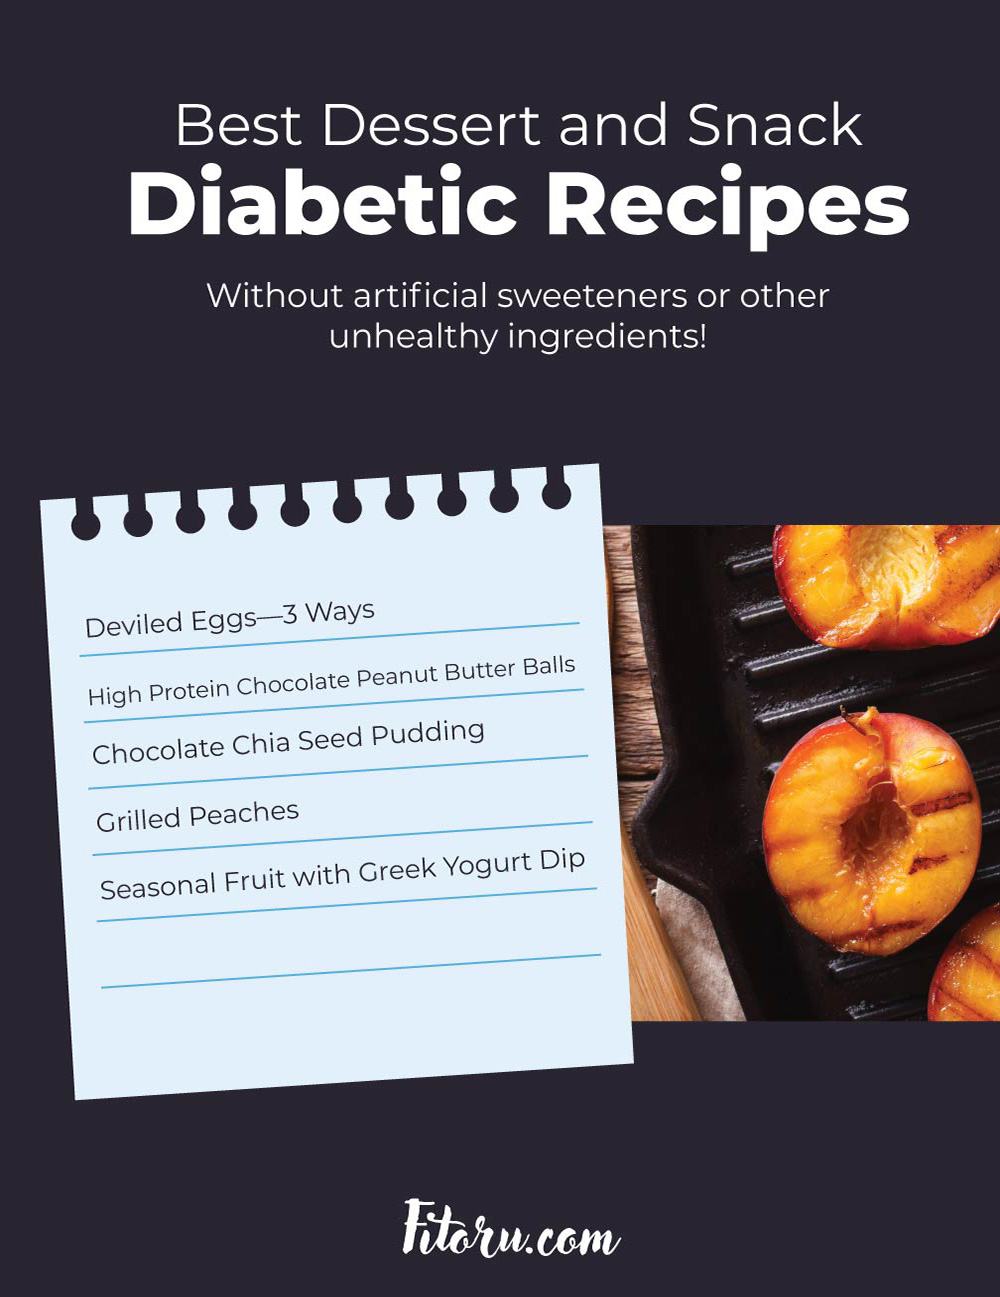 Best Dessert and Snack Diabetic Recipes 